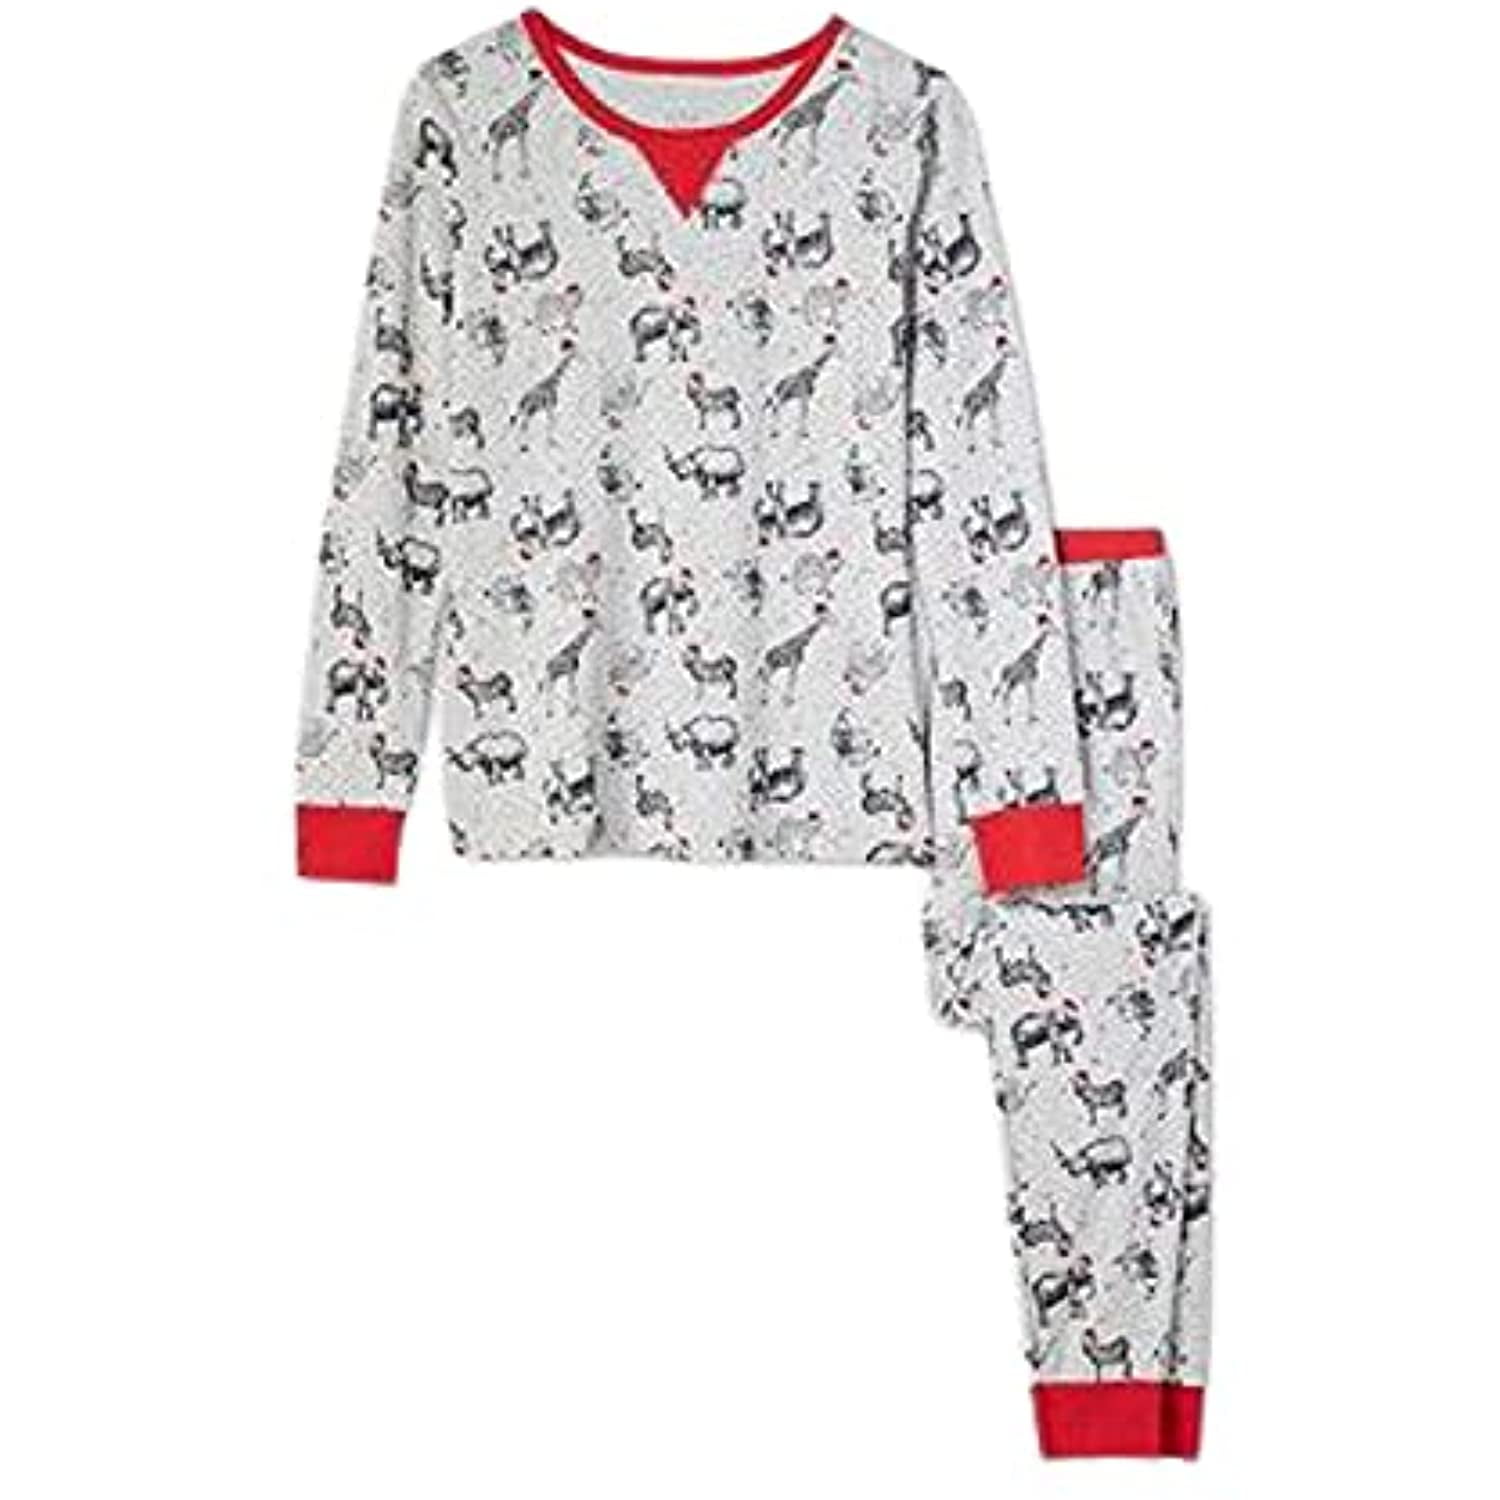 Women\'s Holiday Safari Animal Print Pajama Set - Small by Wondershop Grey